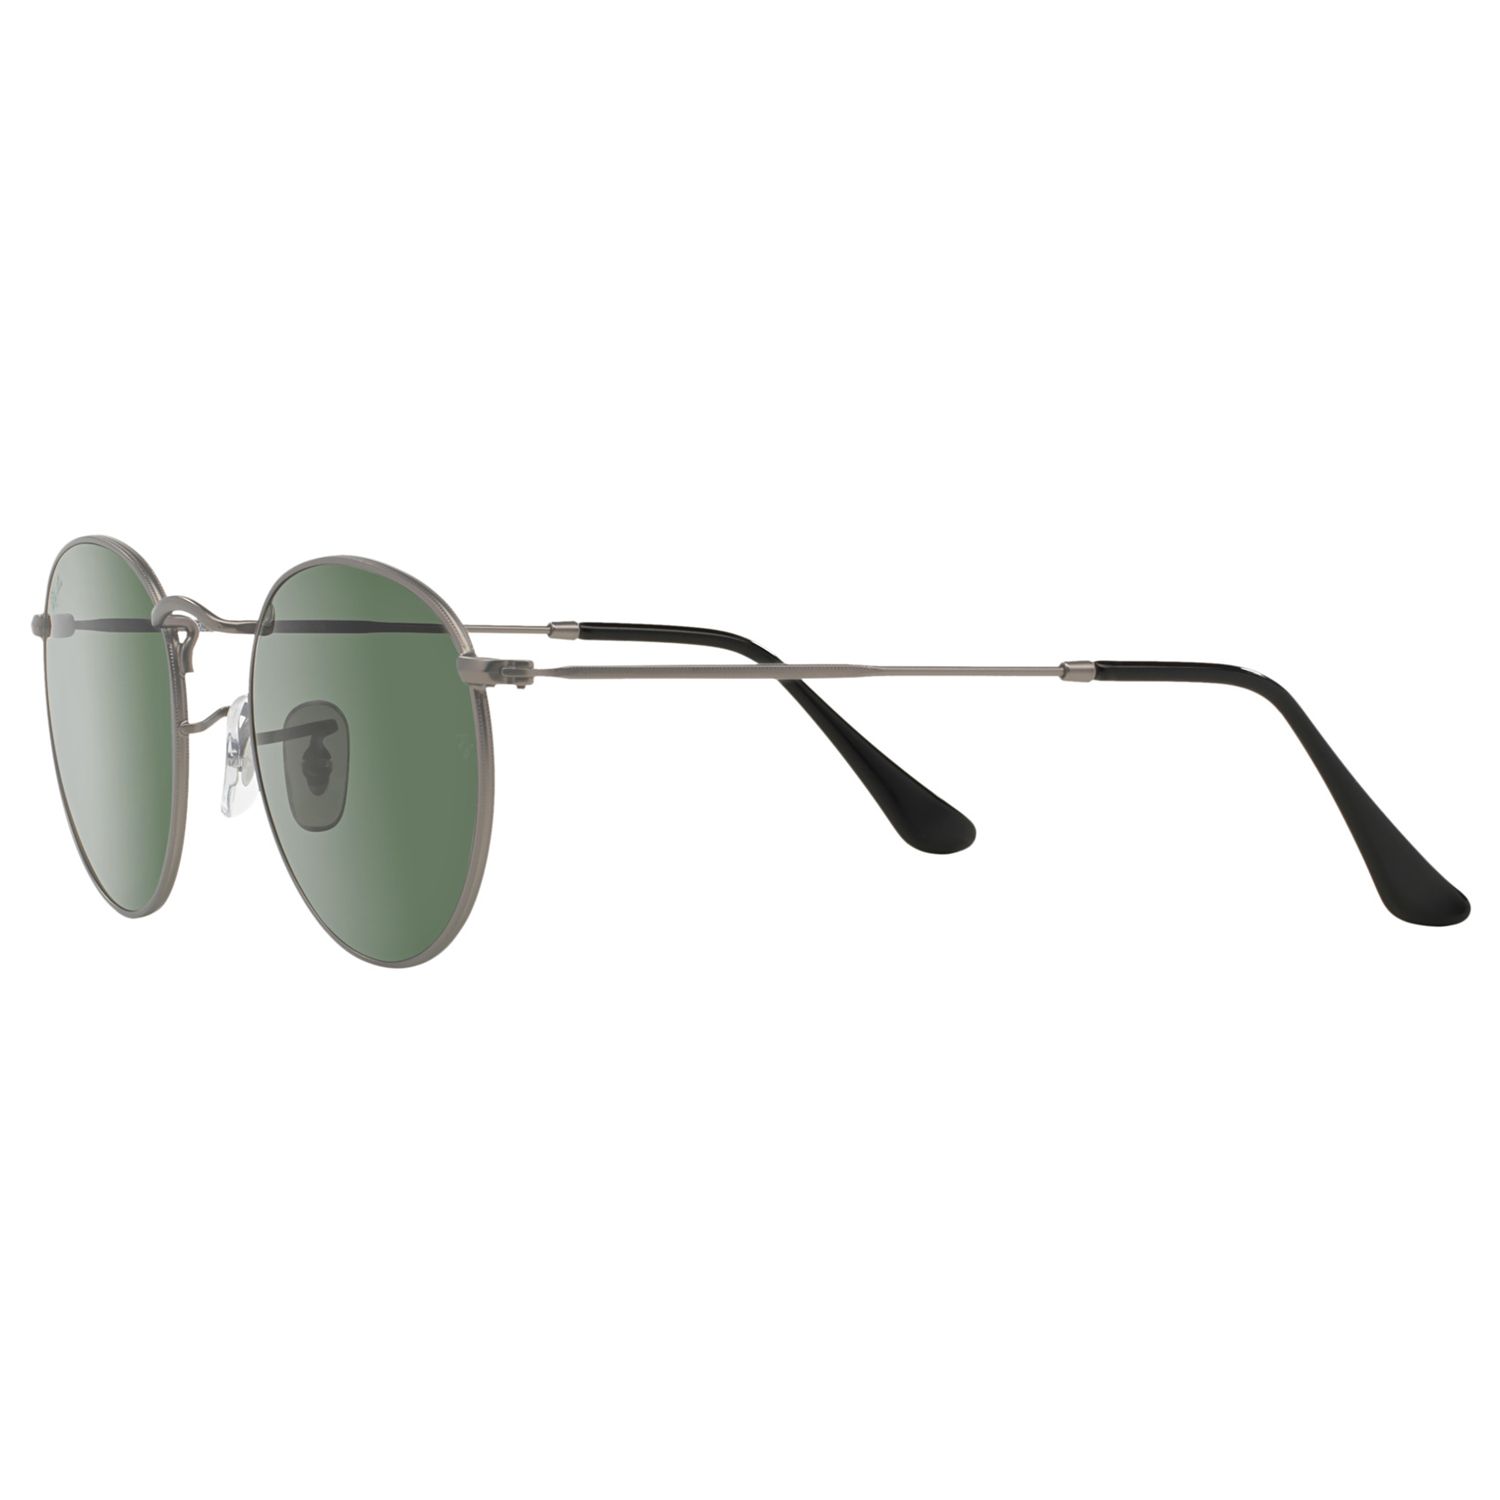 Ray-Ban RB3447 Round Sunglasses, Matte Gunmetal at John Lewis & Partners